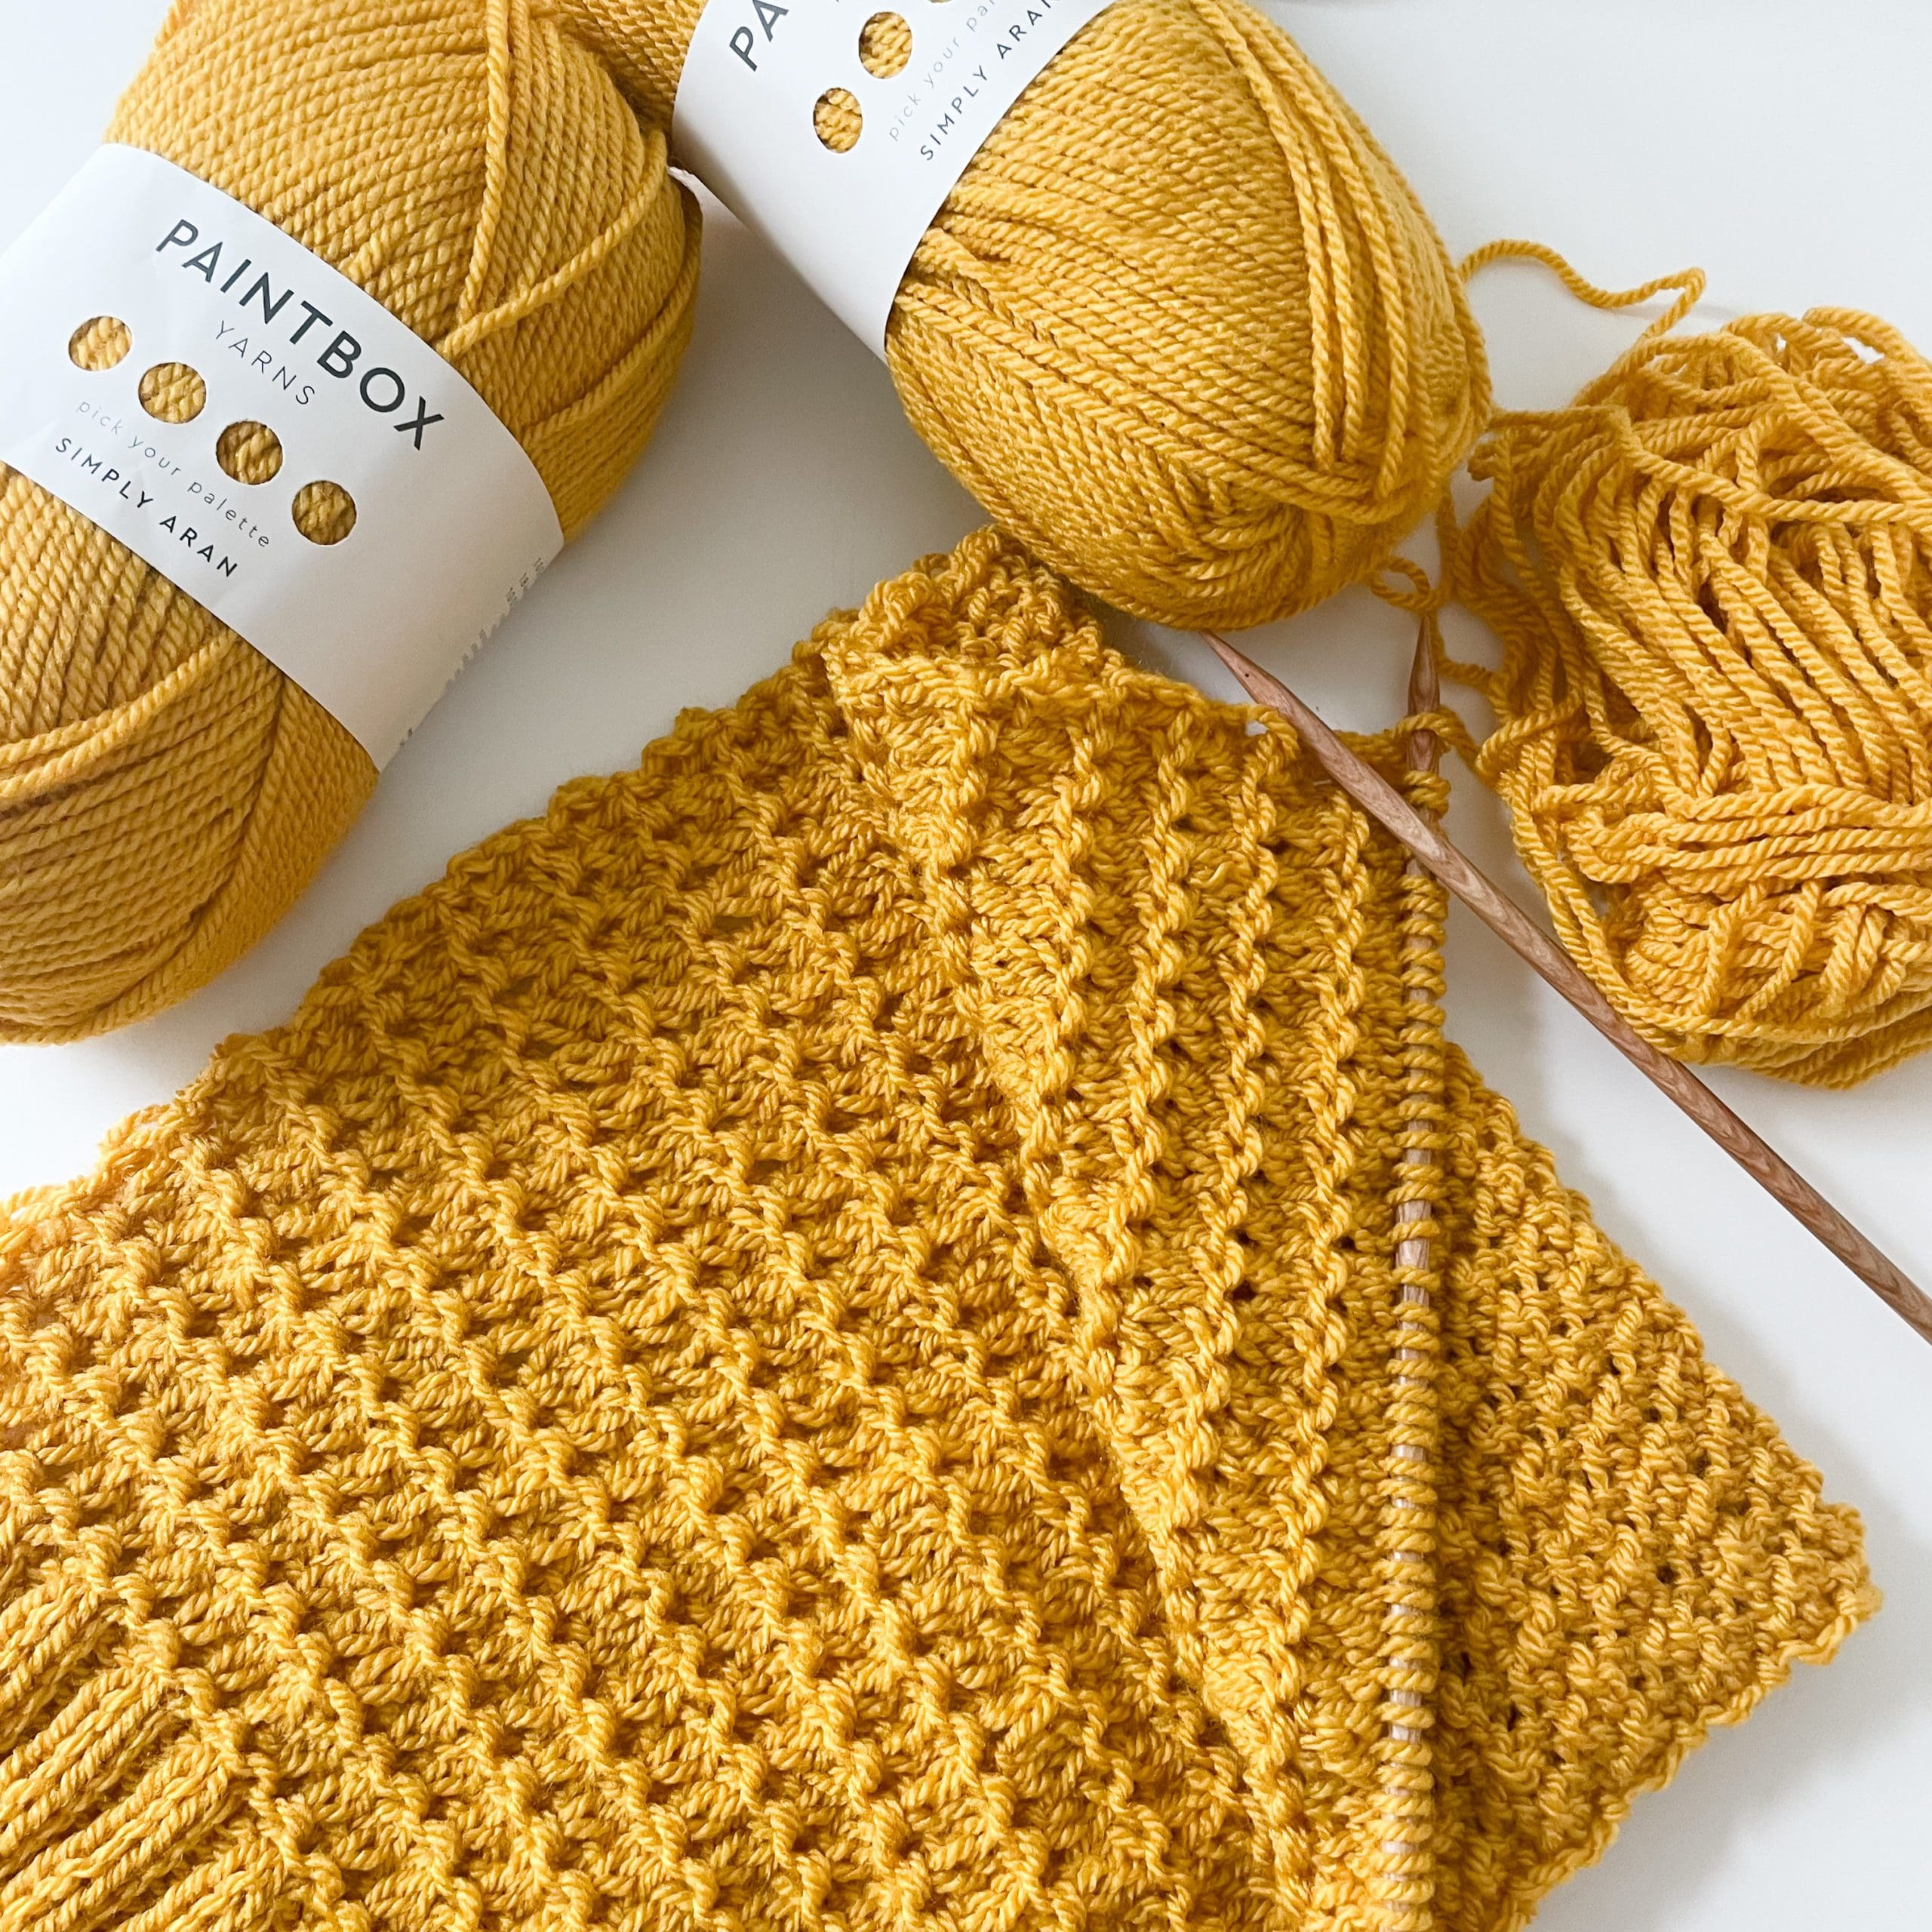 2 free patterns + a favorite yarn = summer bliss! - Knit Picks